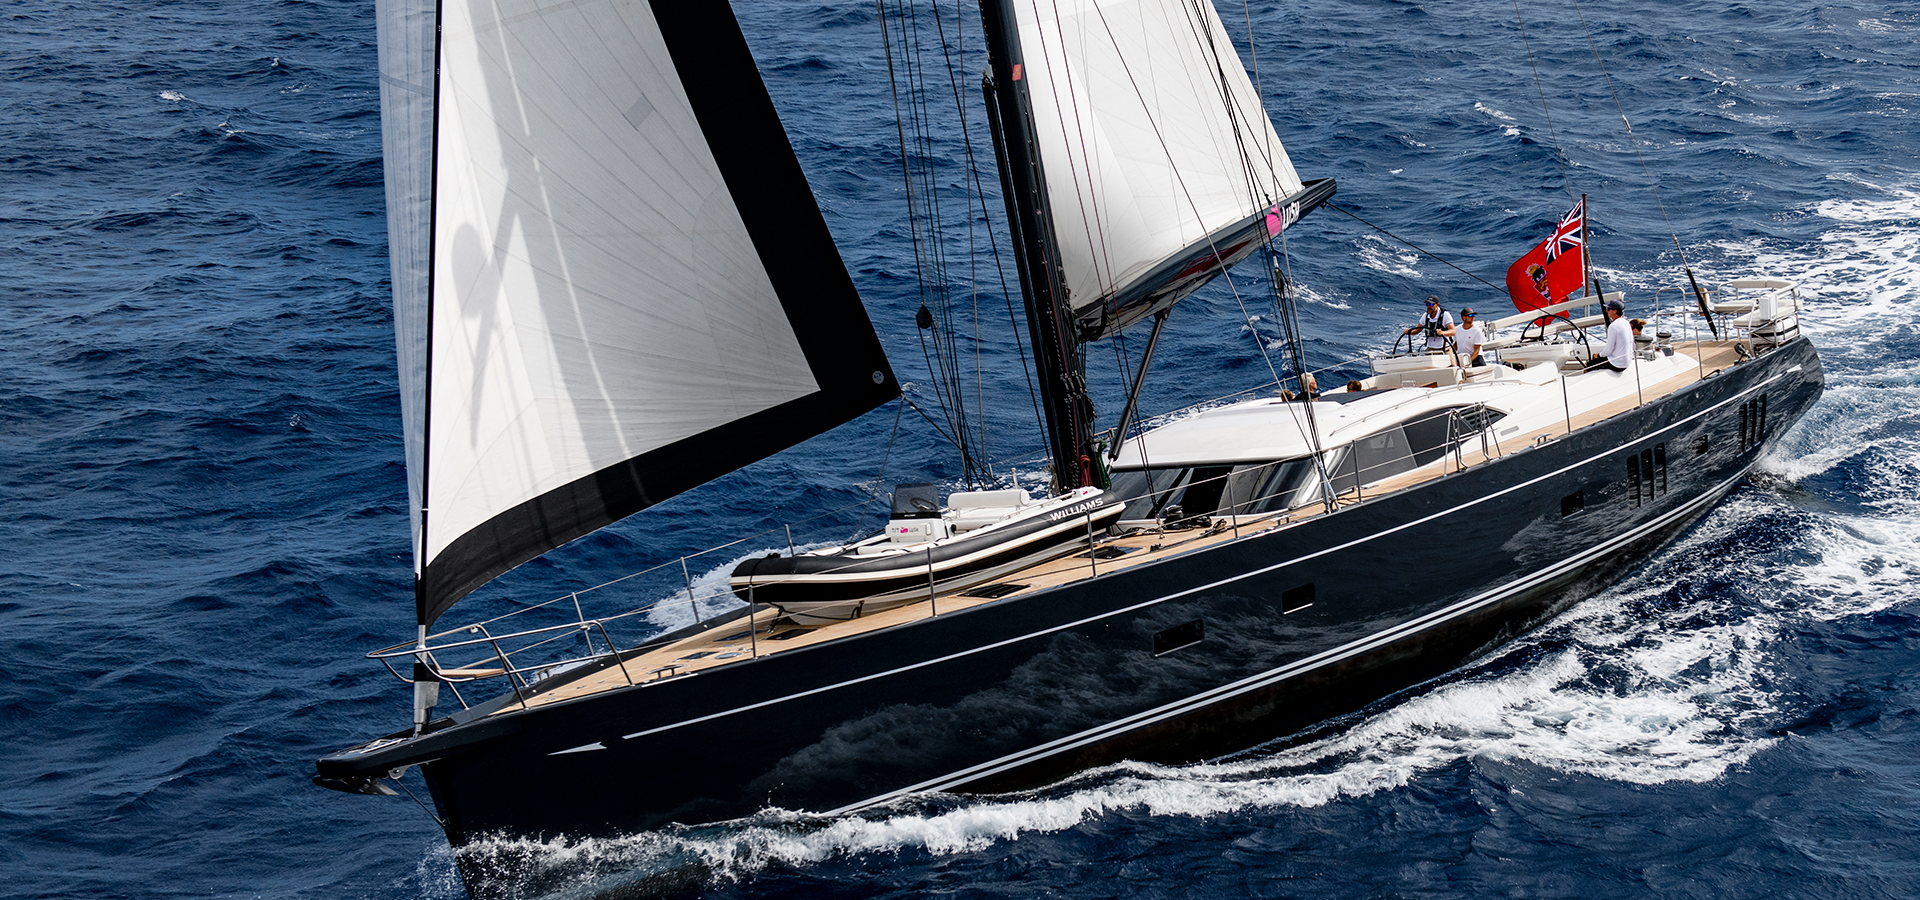 90 ft sailing yacht price